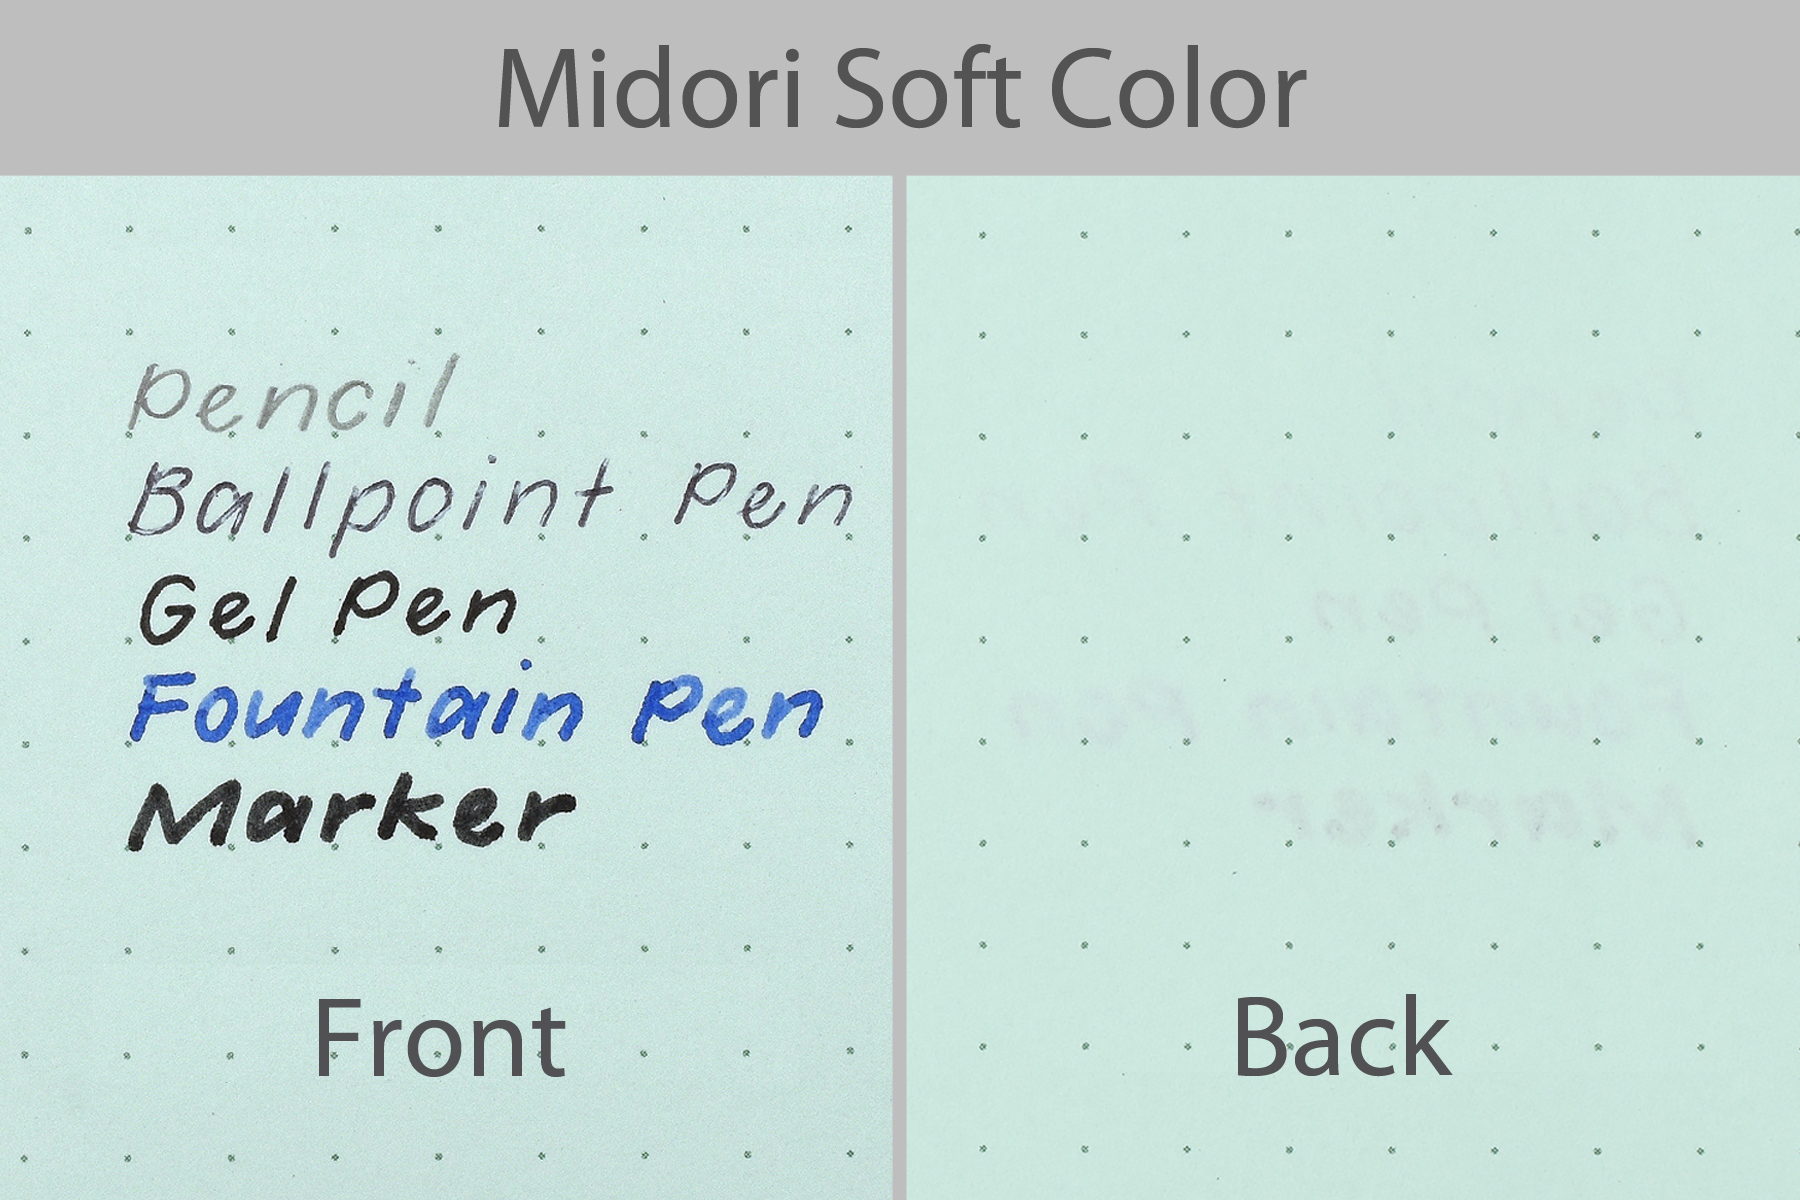 Midori Soft Color writing sample.